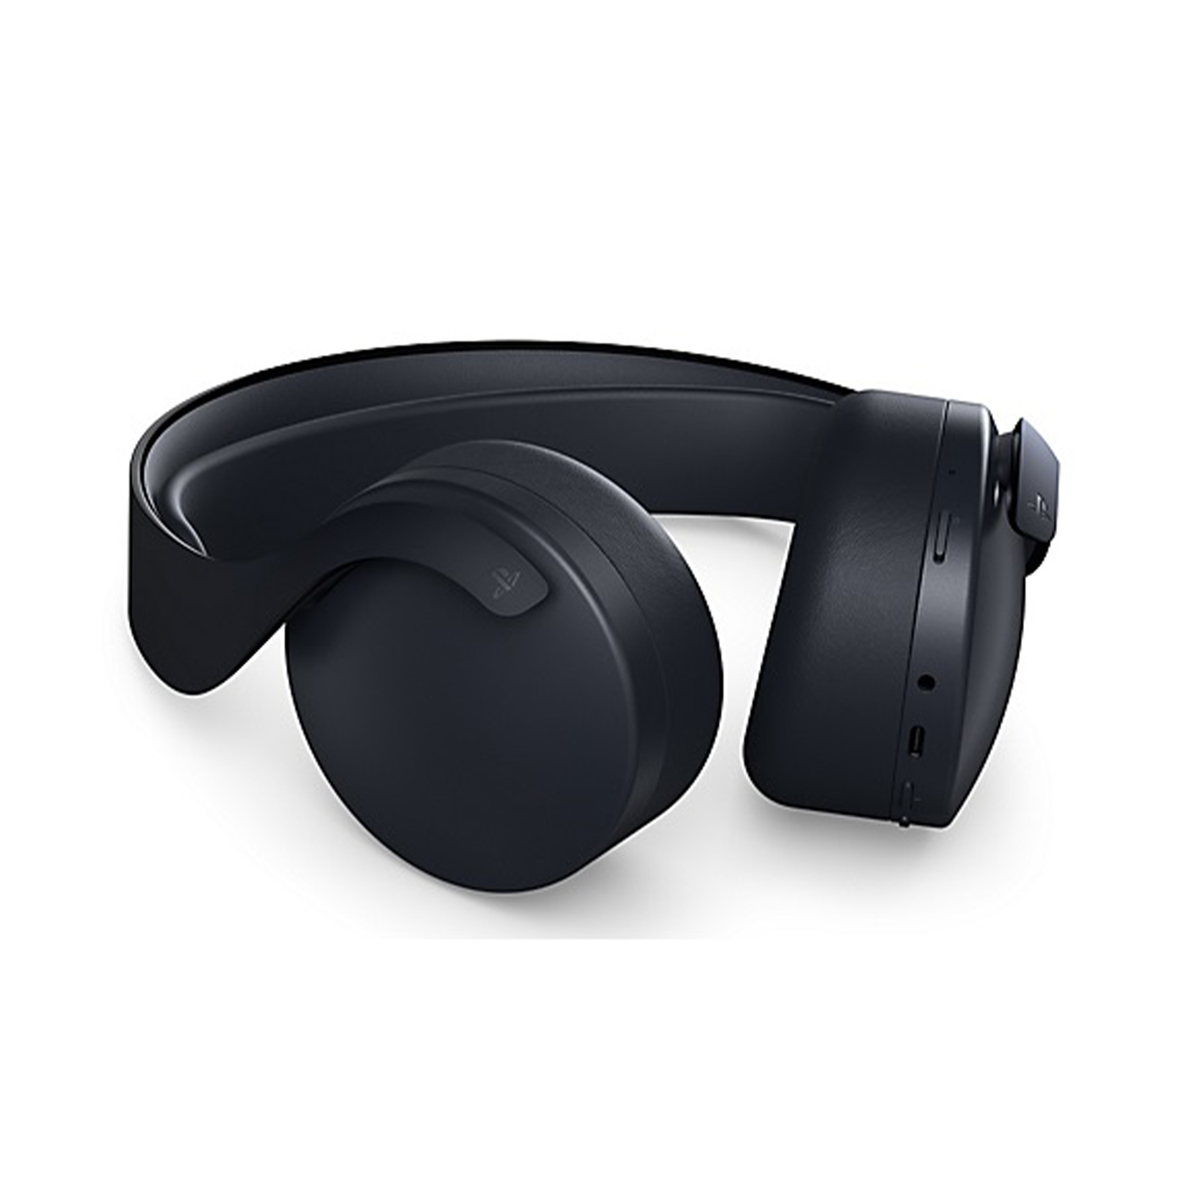 Sony PS5 PULSE 3D Wireless Headset Midnight Black